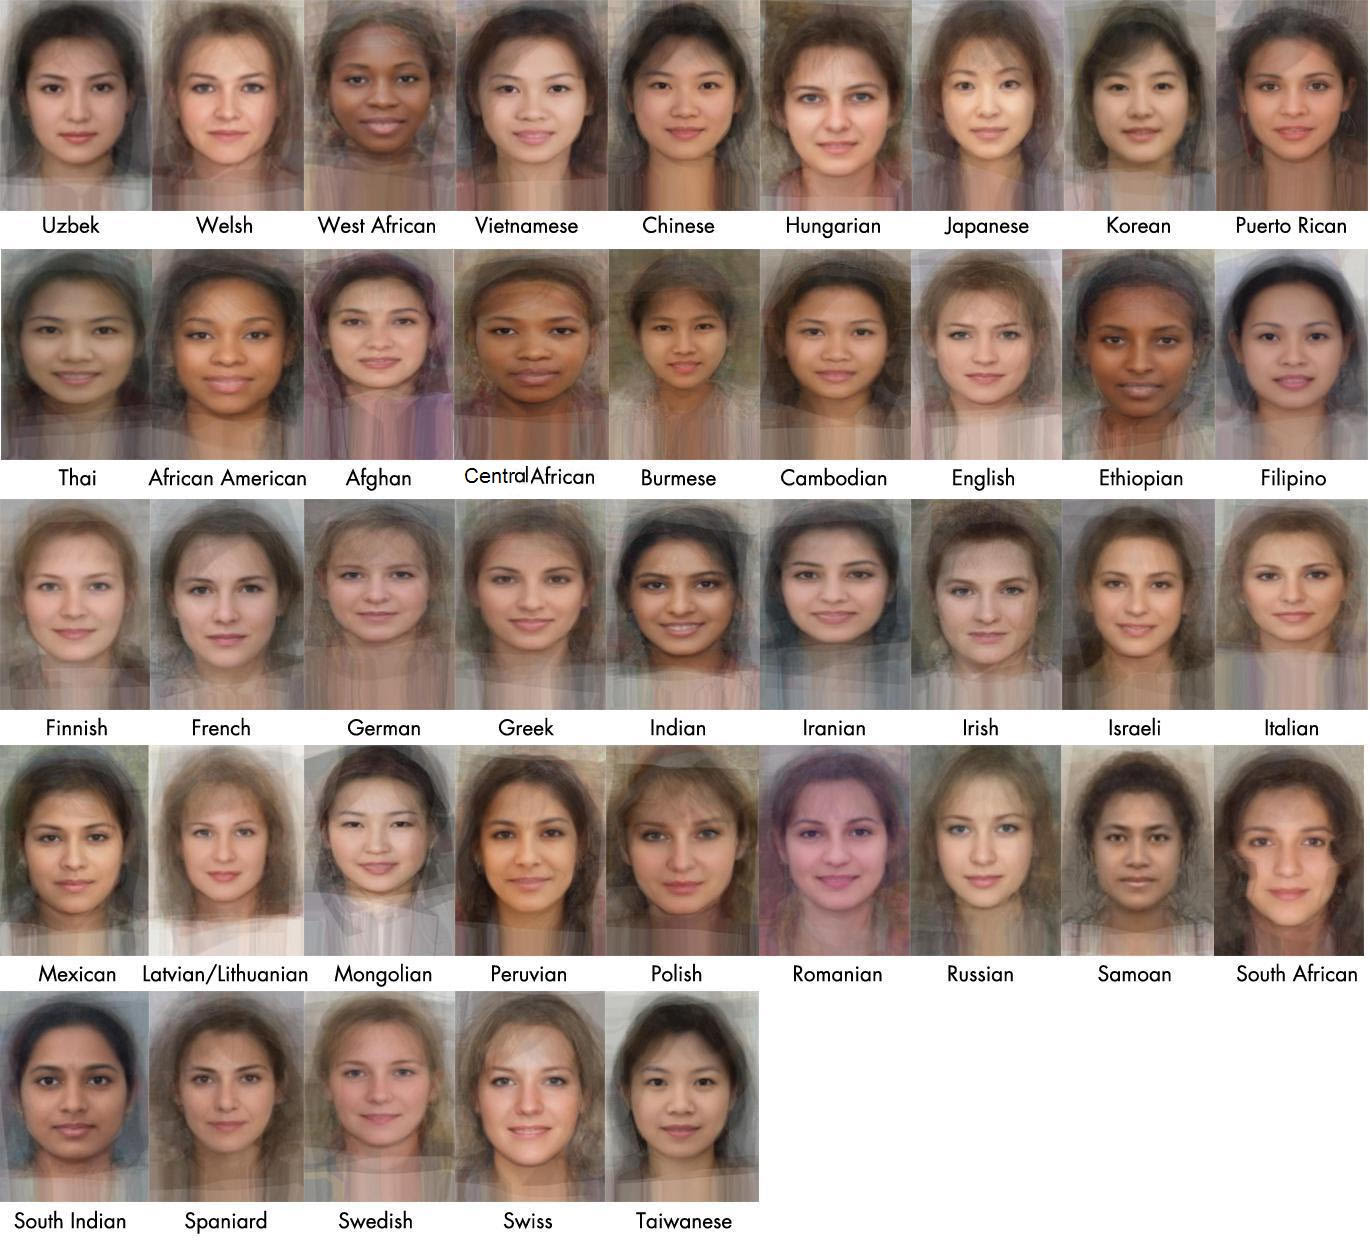 http://www.photoxels.com/images/Fun/average-face.jpg